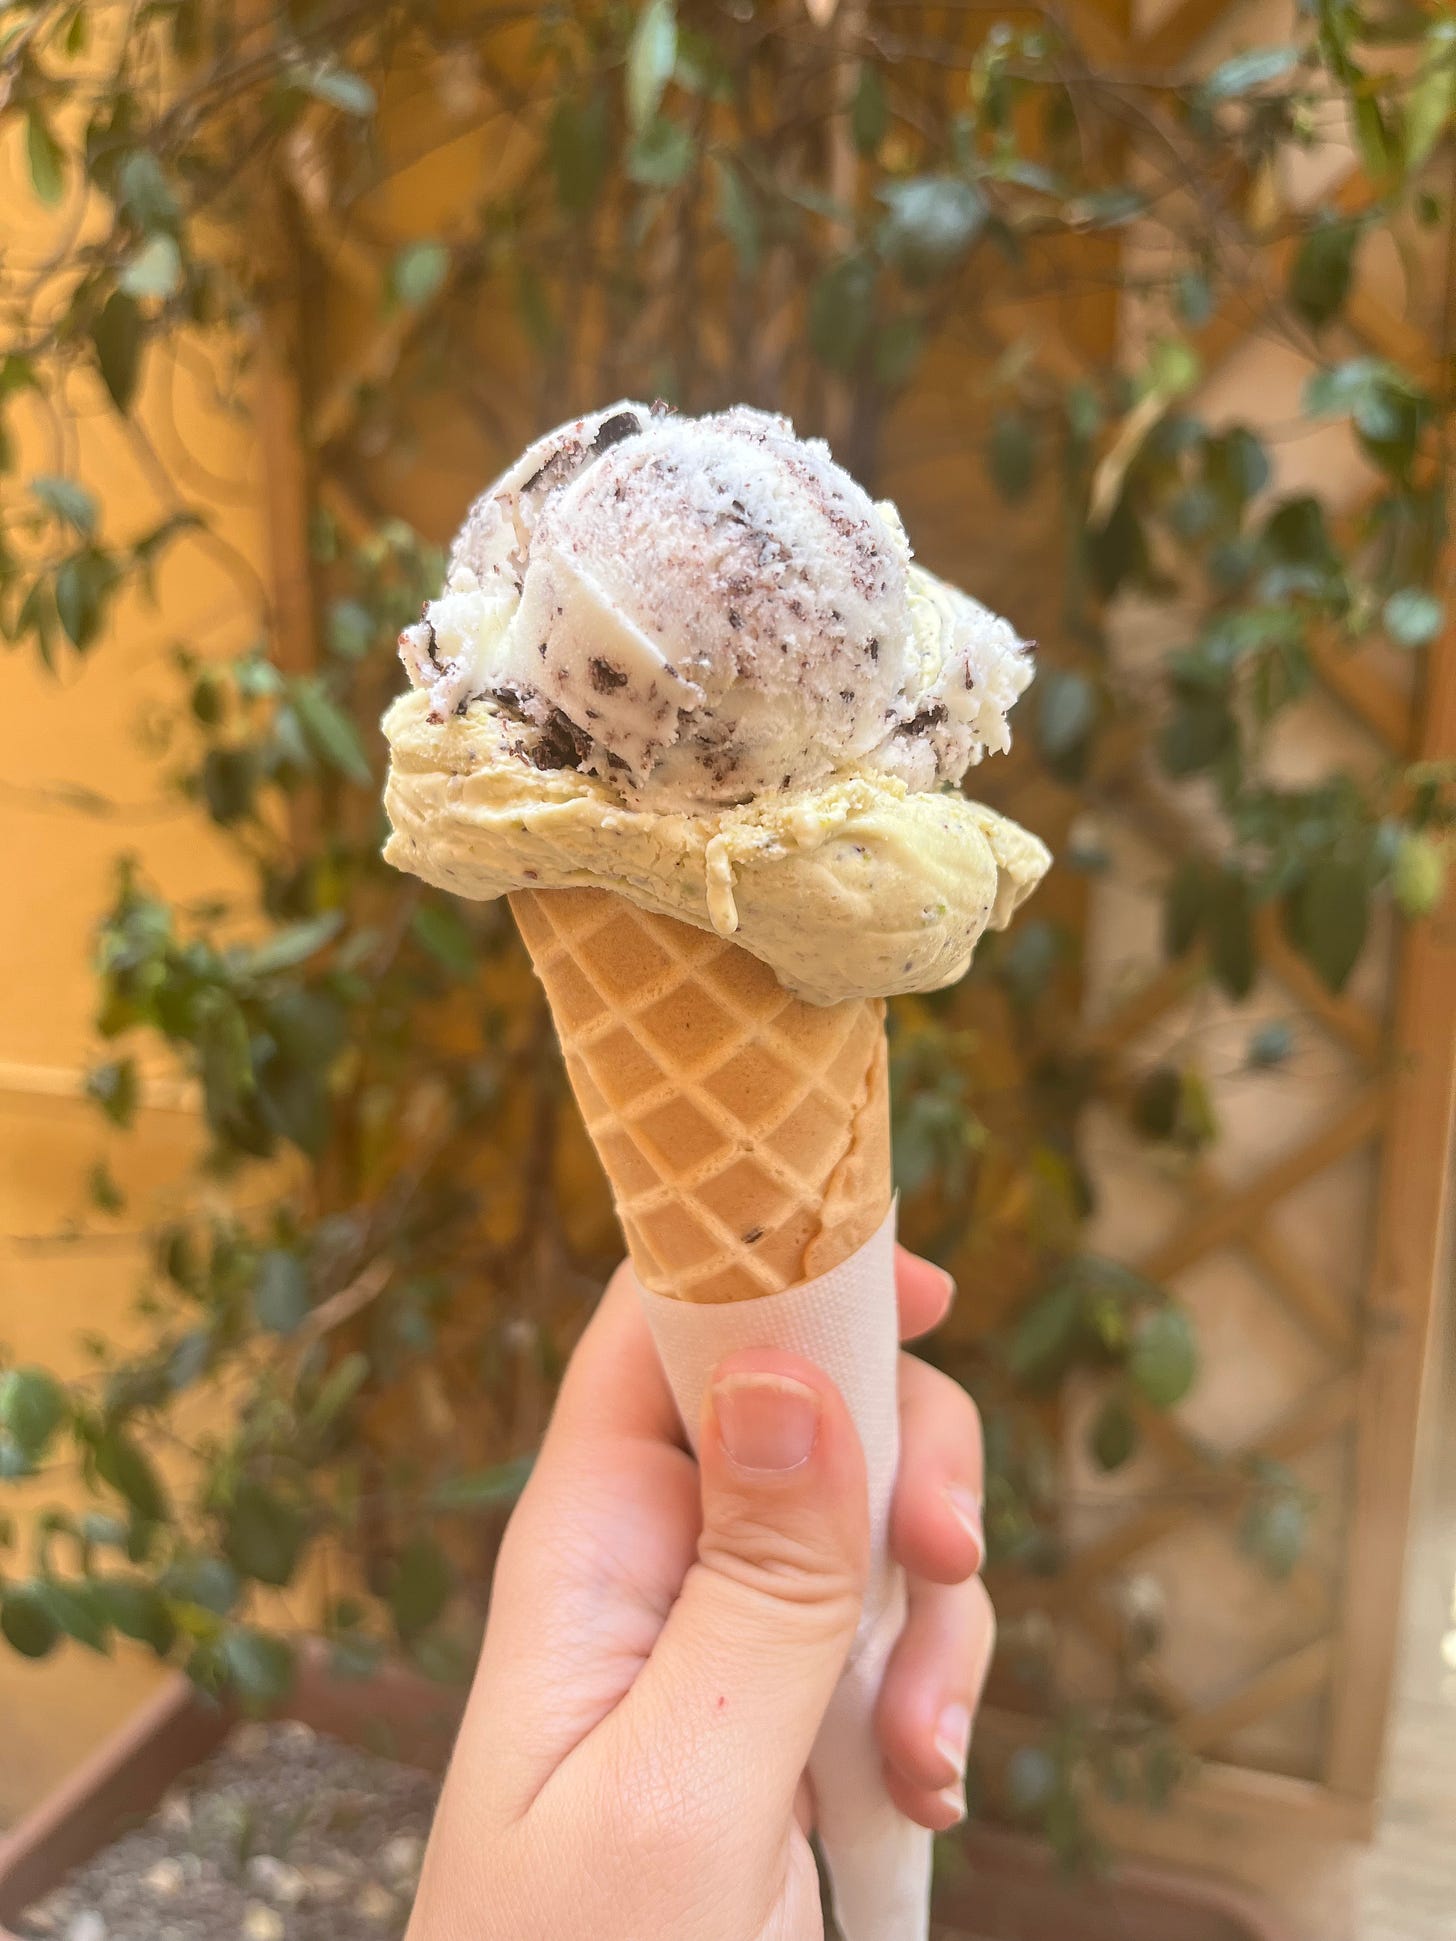 gelato from fatamorgana